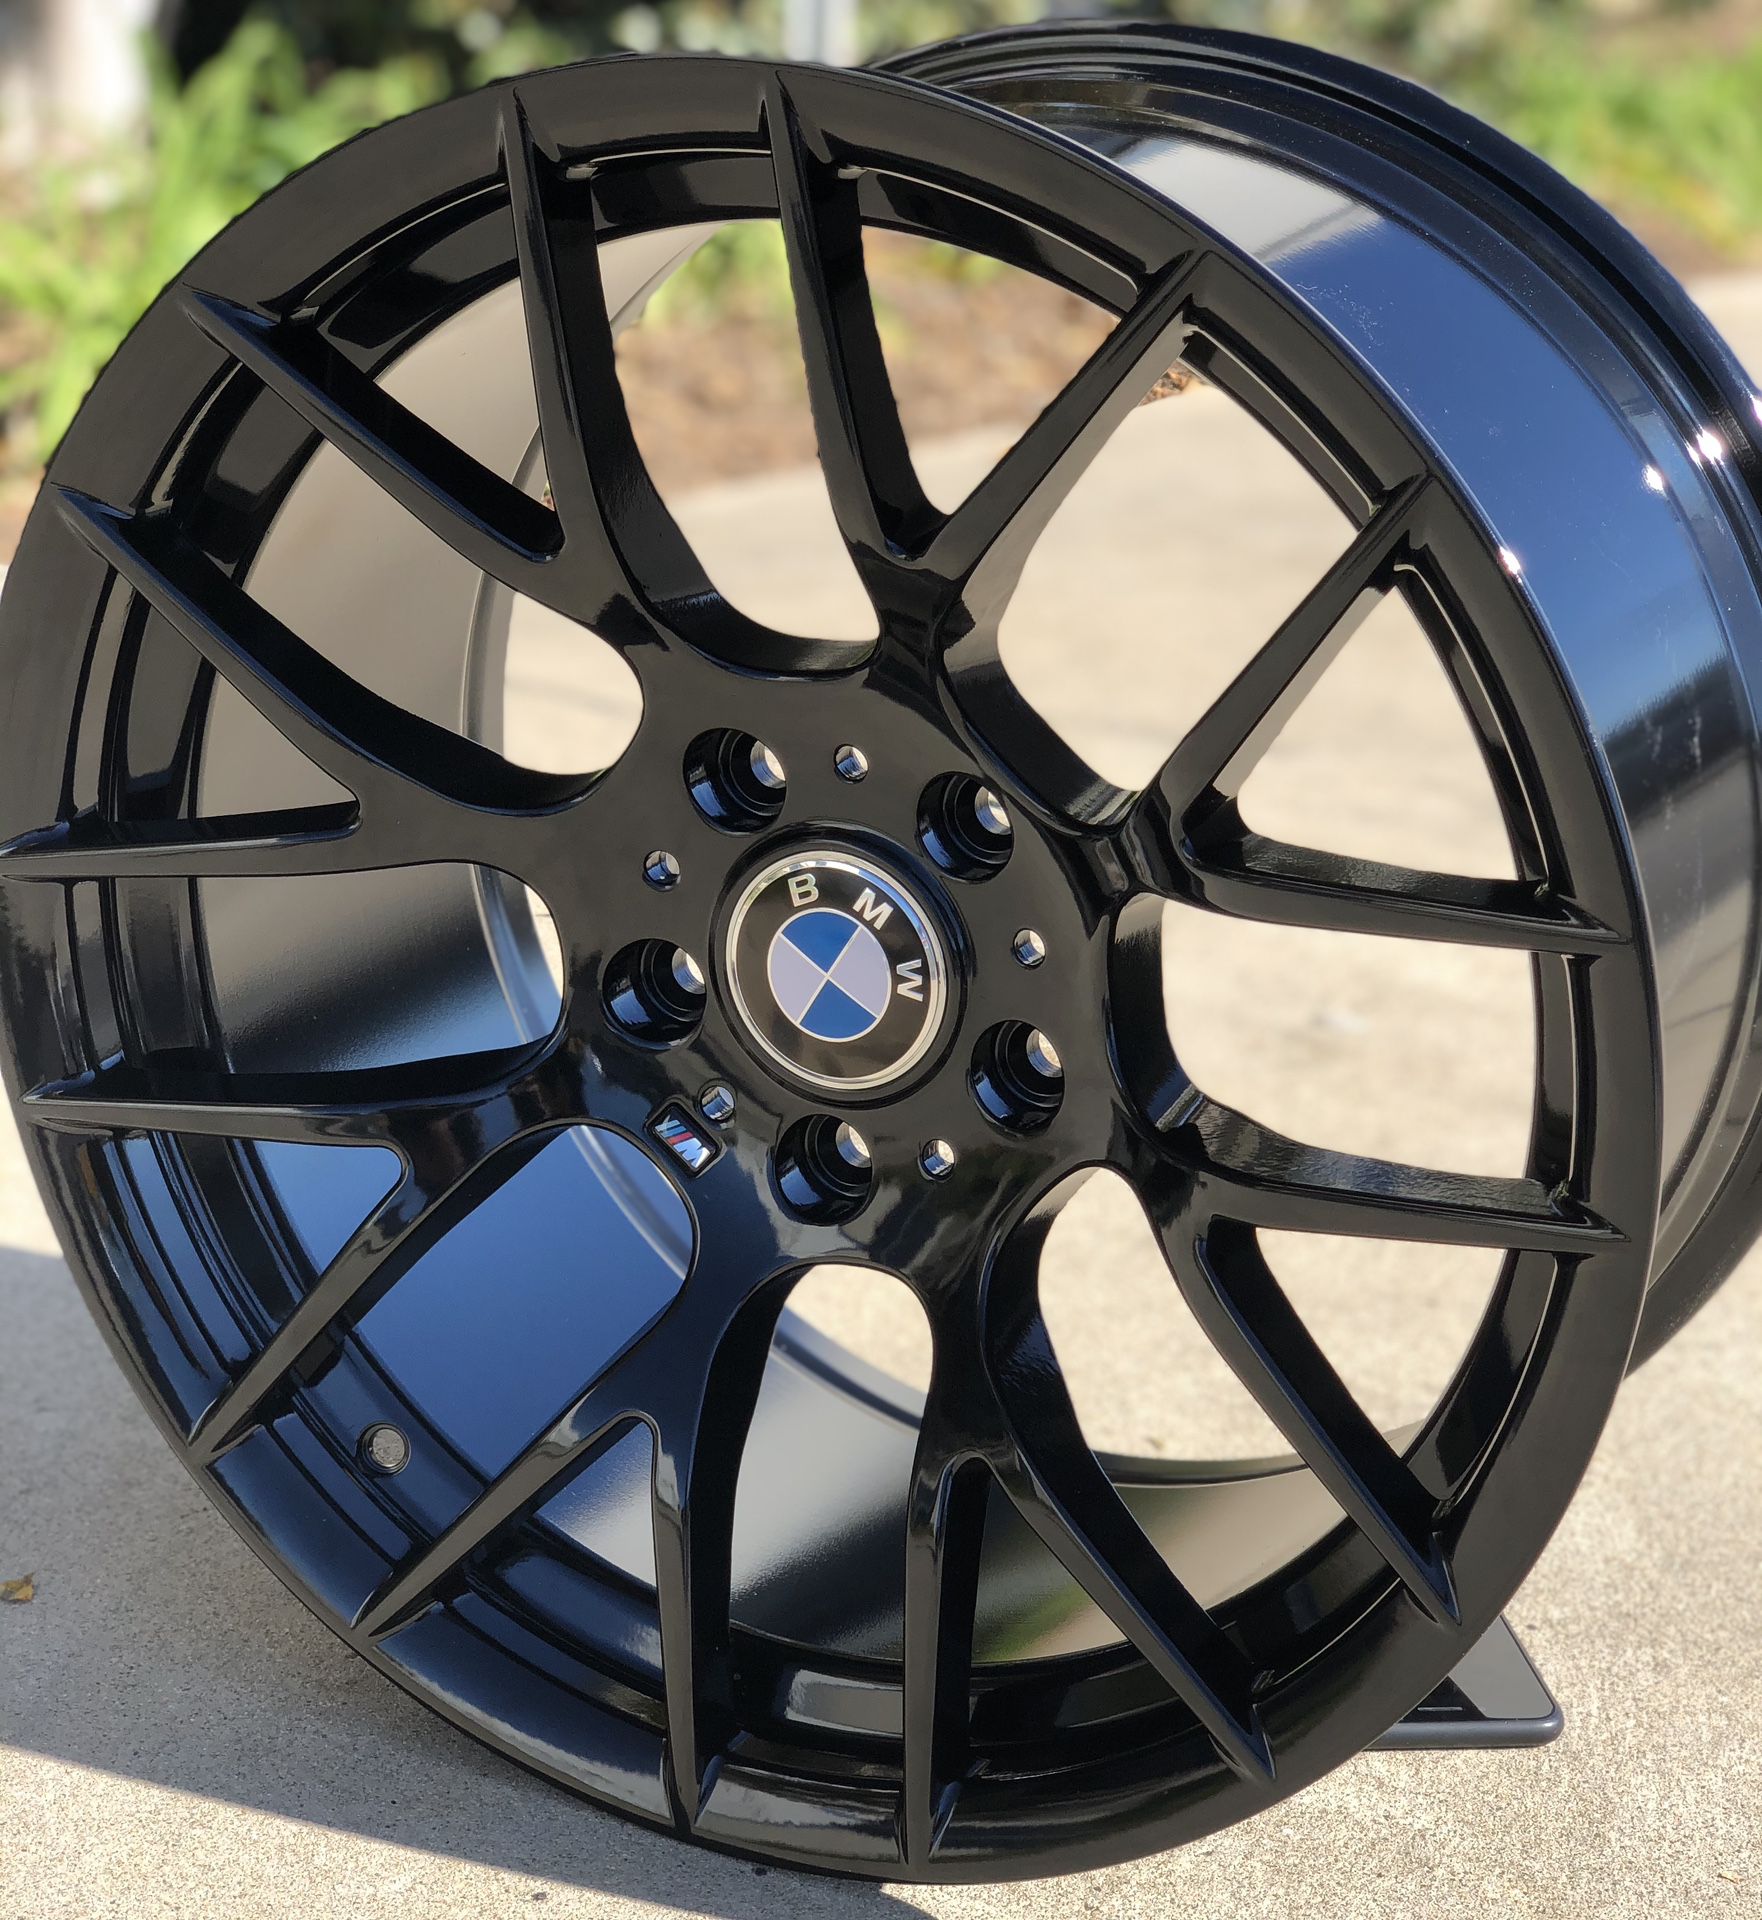 Brand New 18x8.5 +25 Offset Gloss Black BMW Style Wheels 5x120 All 4